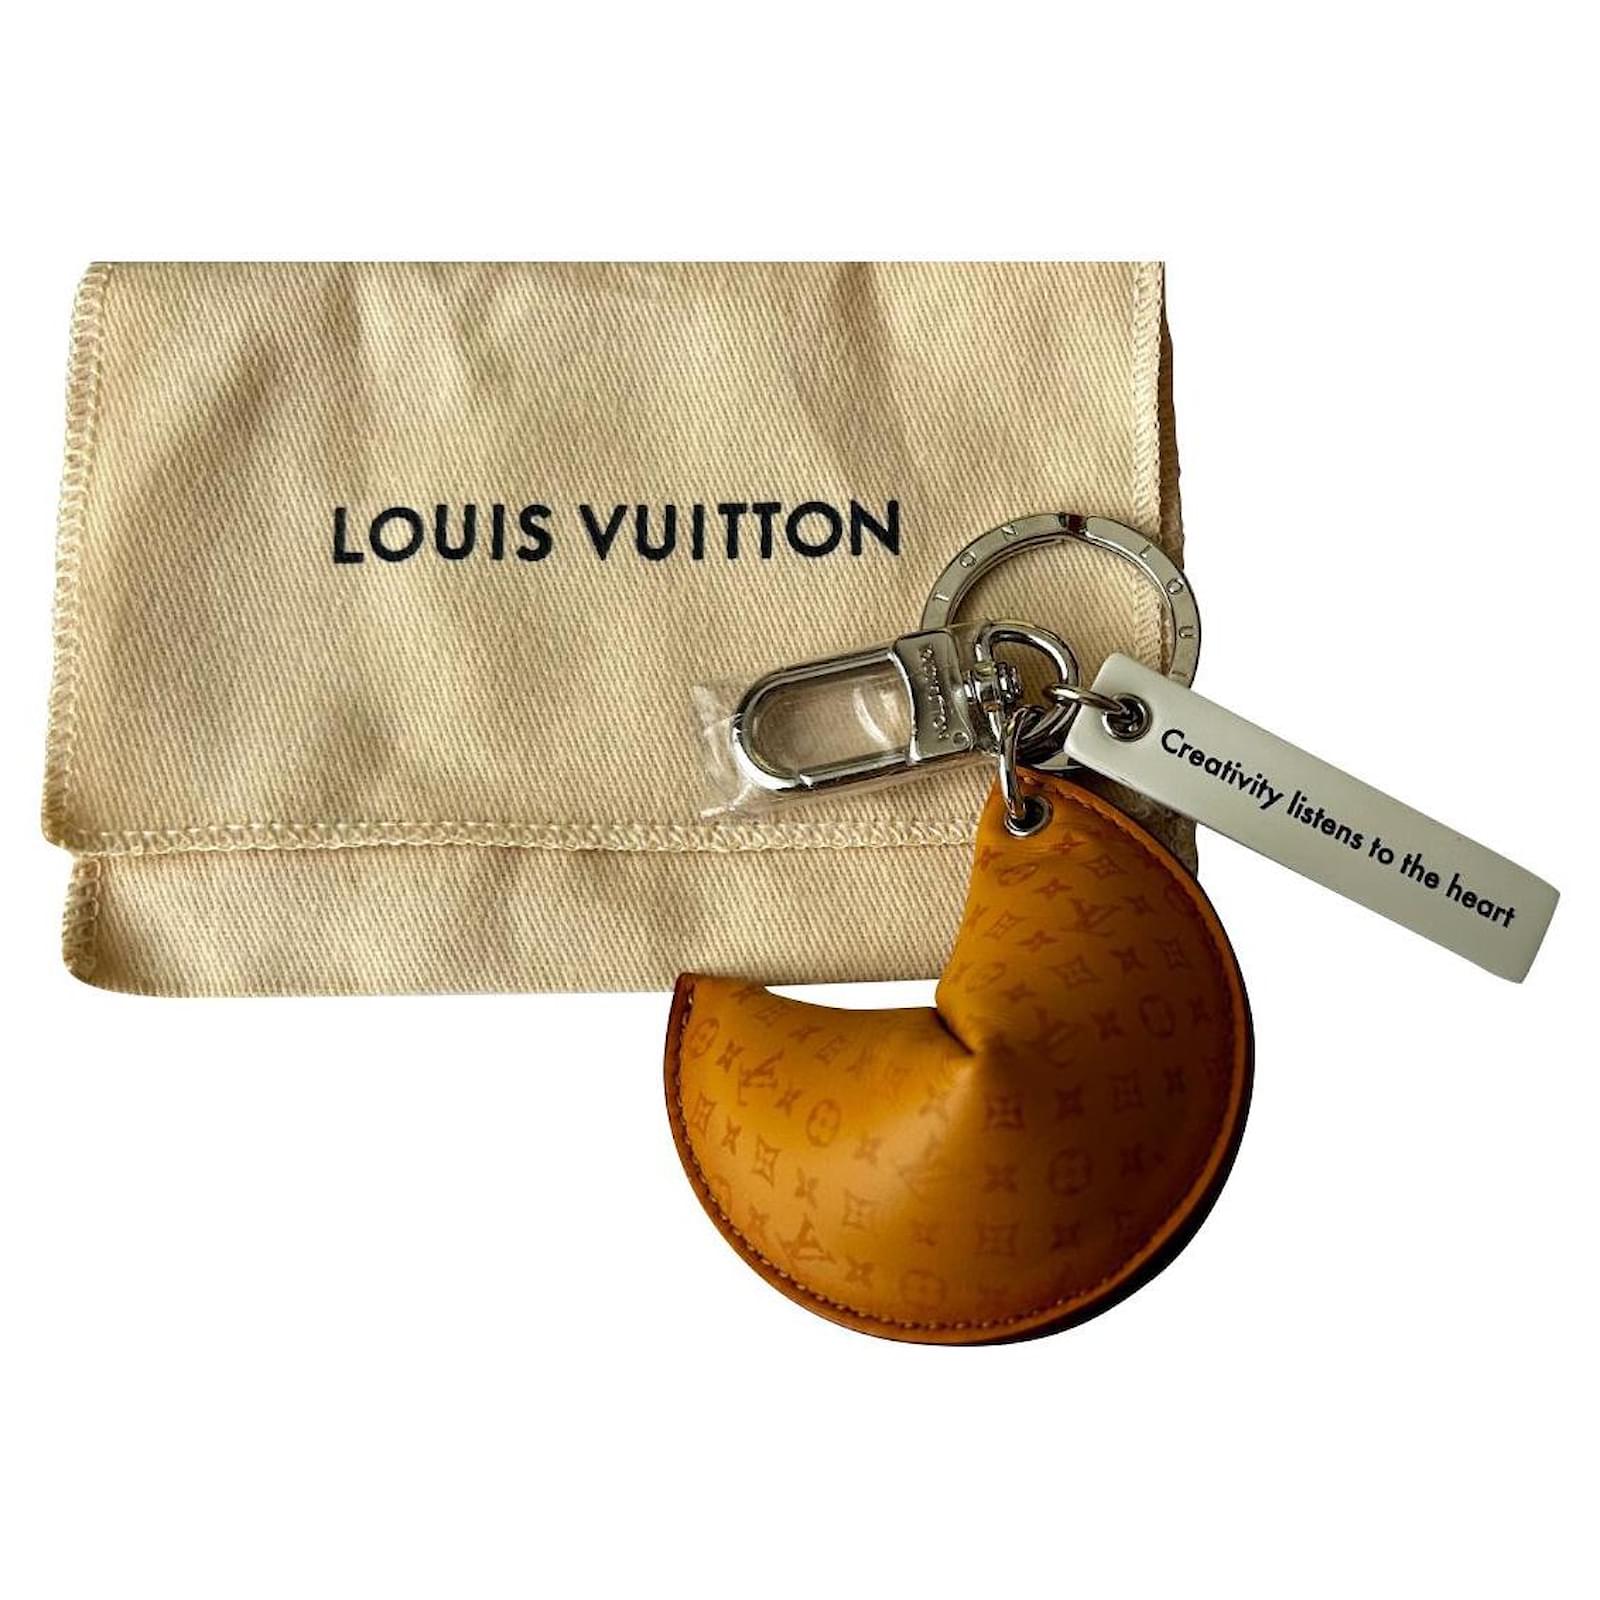 Louis Vuitton Cookie 